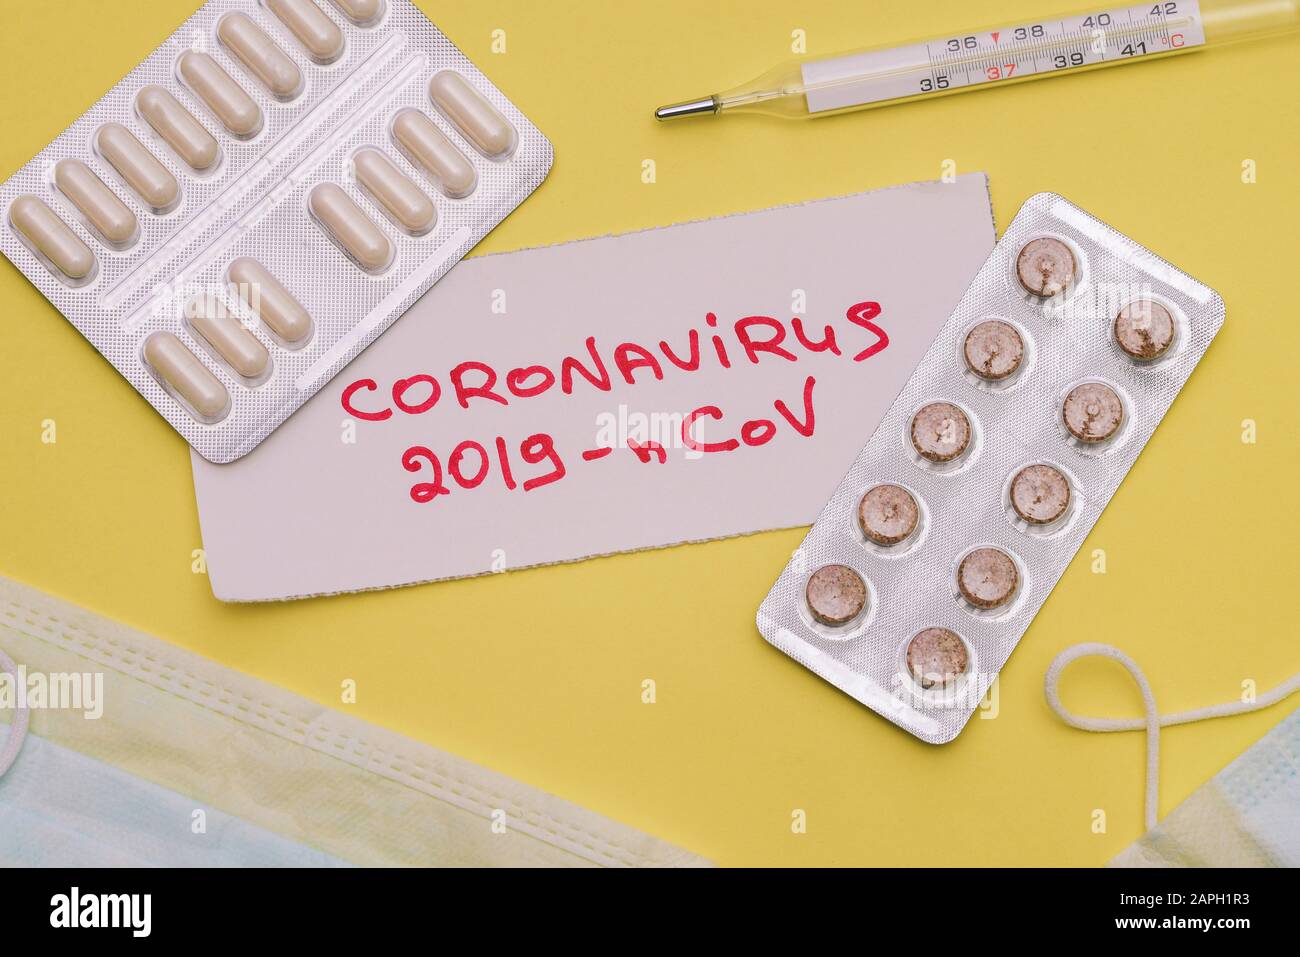 Novel coronavirus 2019-nCoV handwritten text on a yellow background. Virus protection, respiratory mask, pills and thermometer Stock Photo